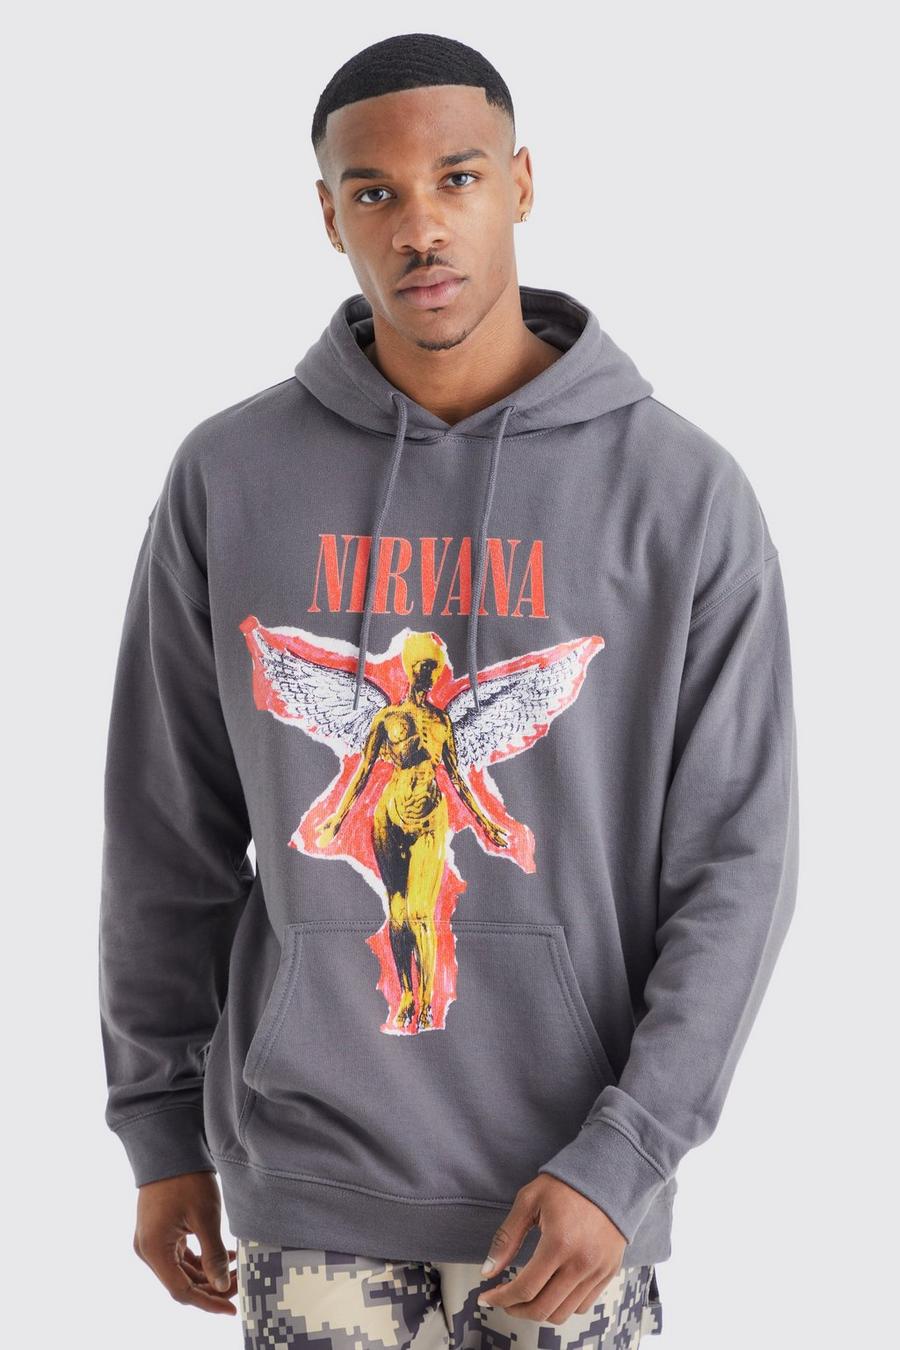 Charcoal grey Oversized Nirvana License Hoodie